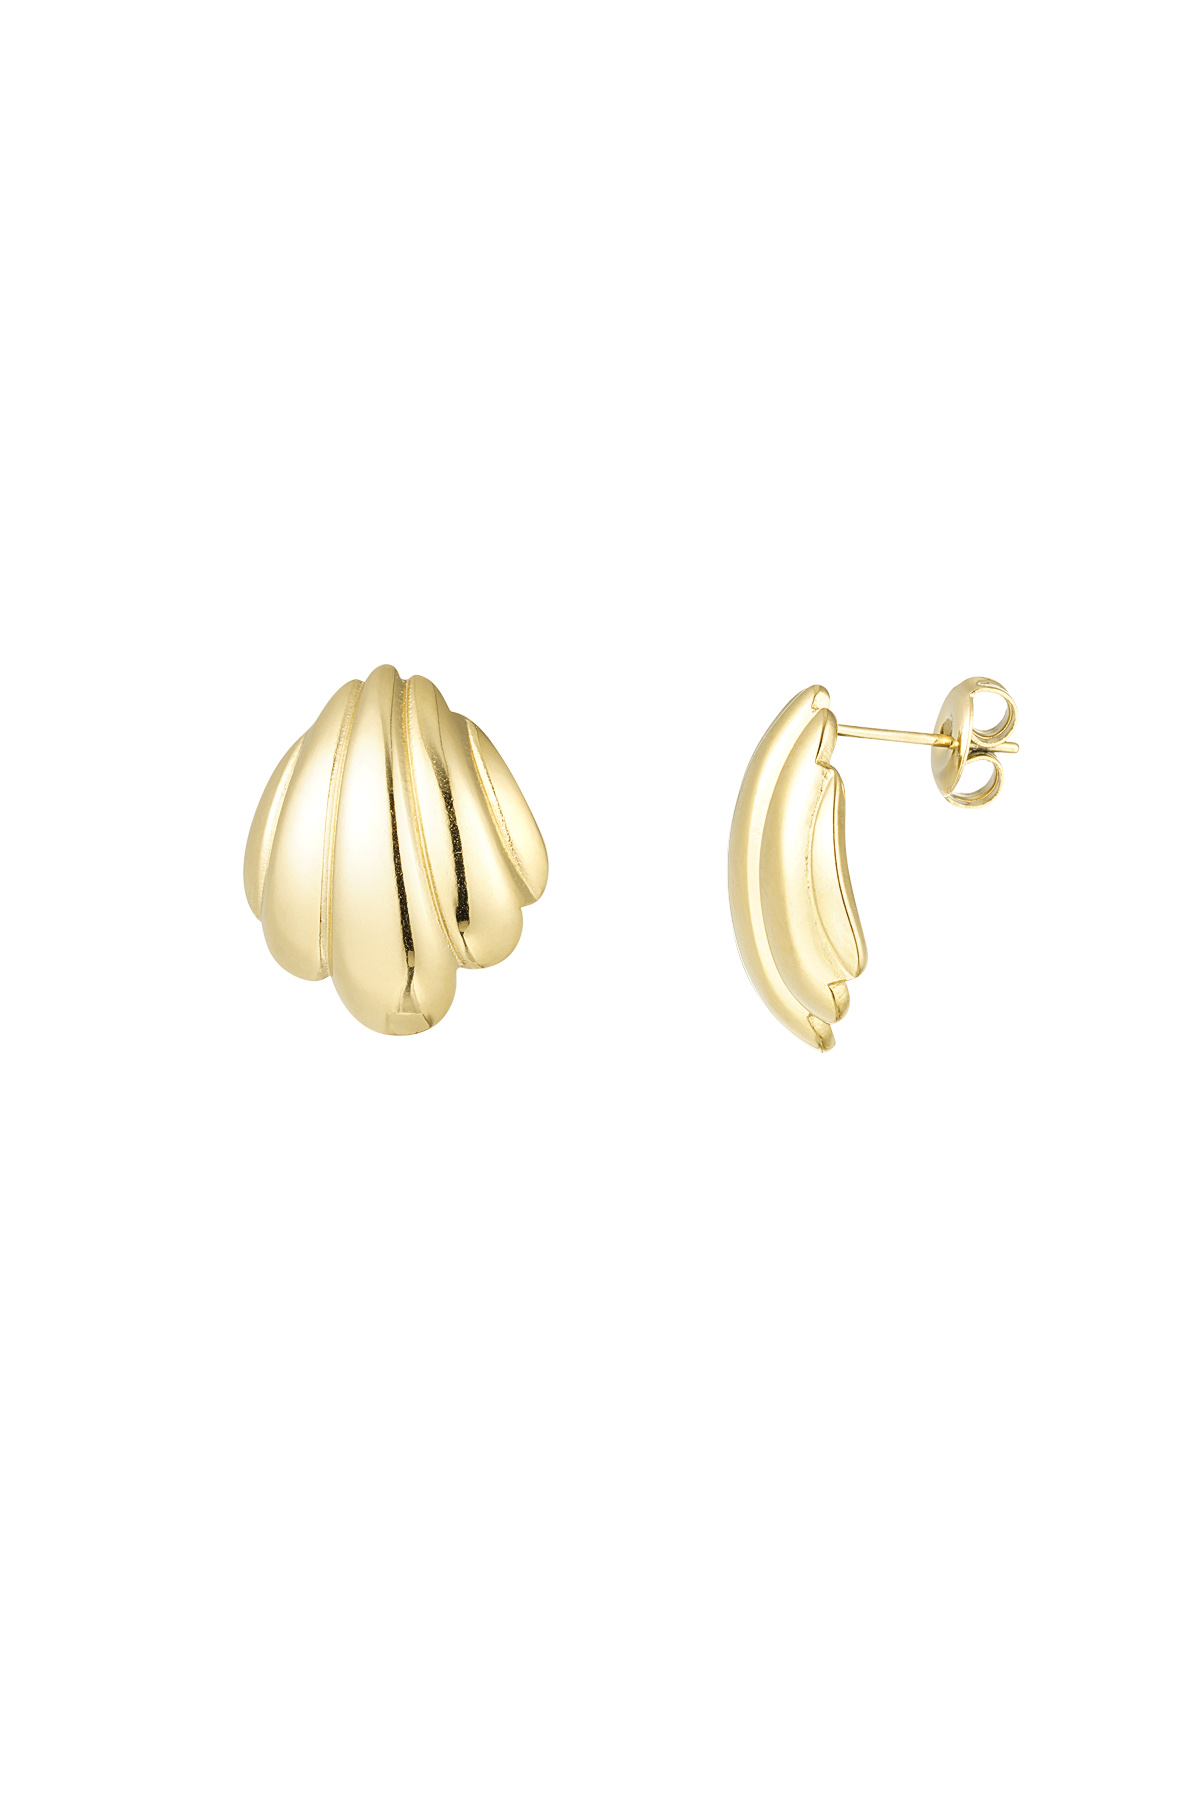 Shell earrings - gold